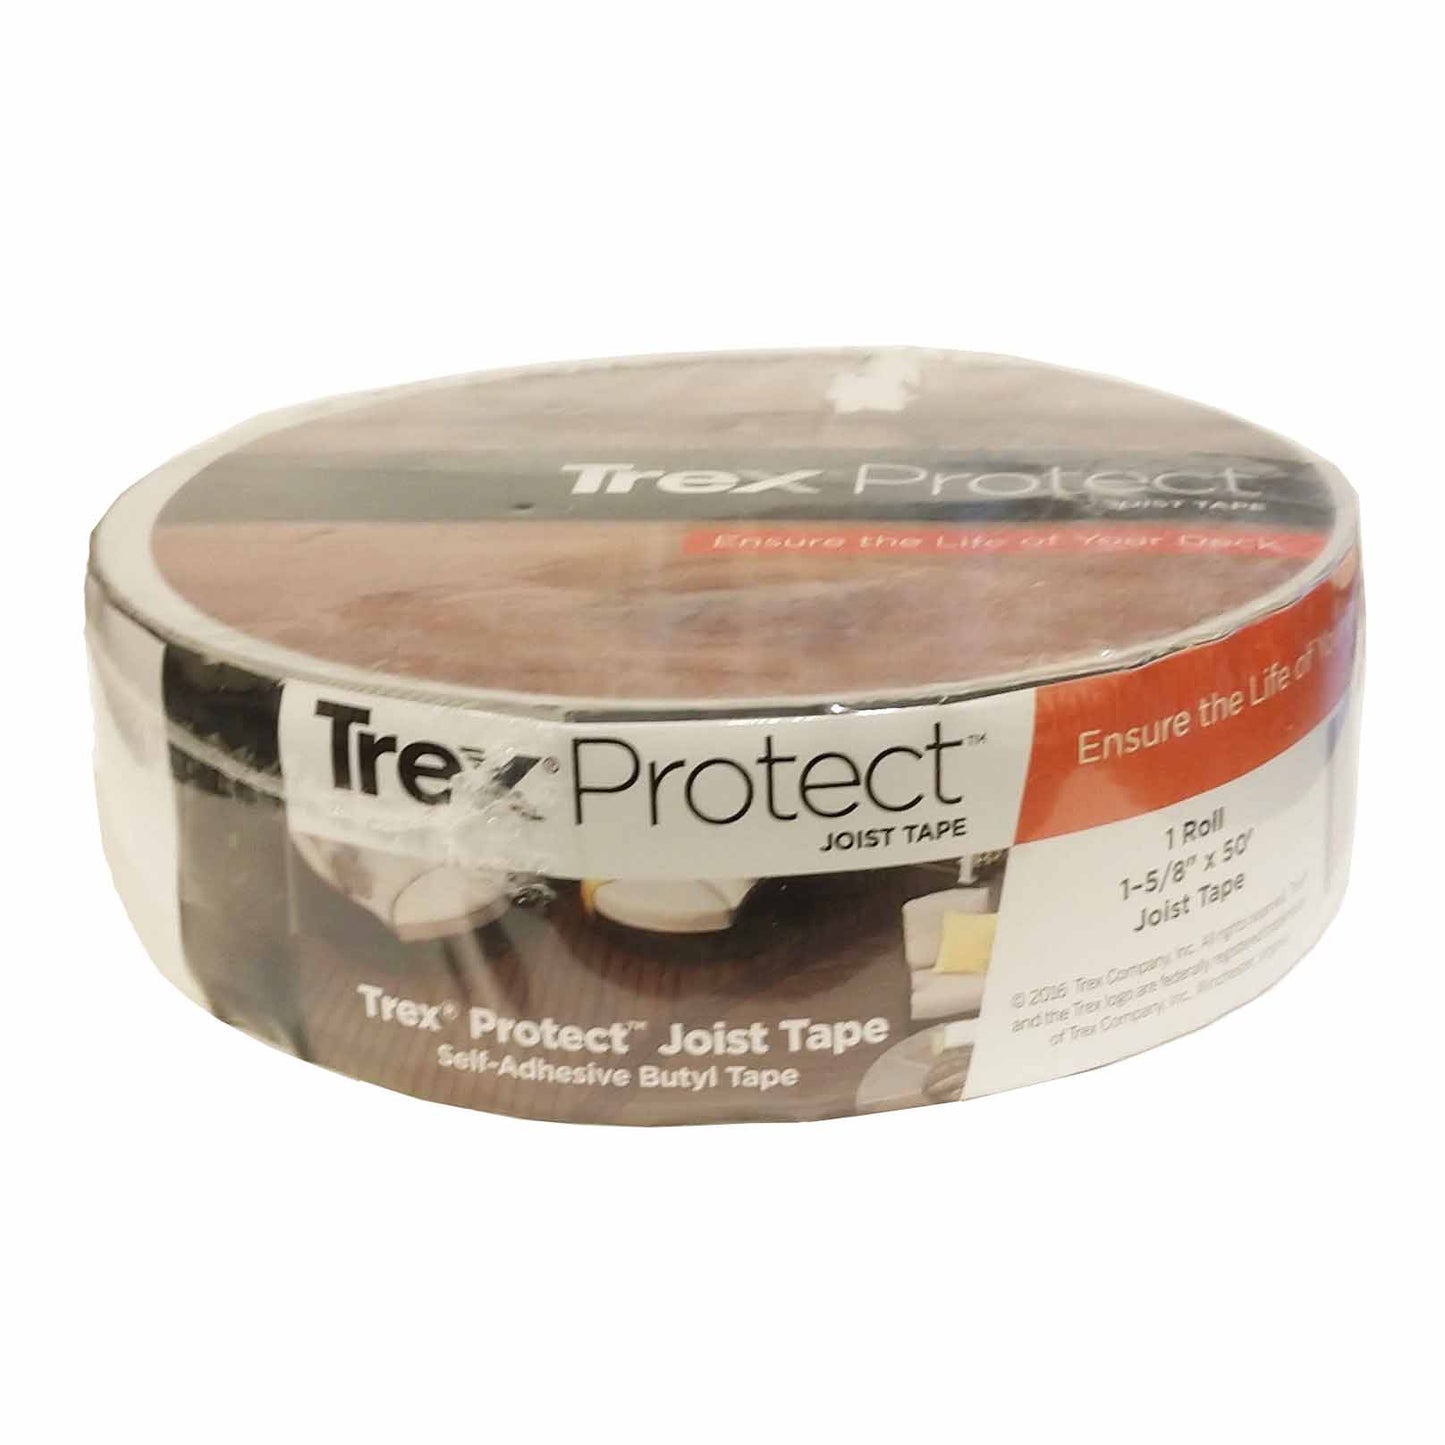 Trex Protect Joist Tape